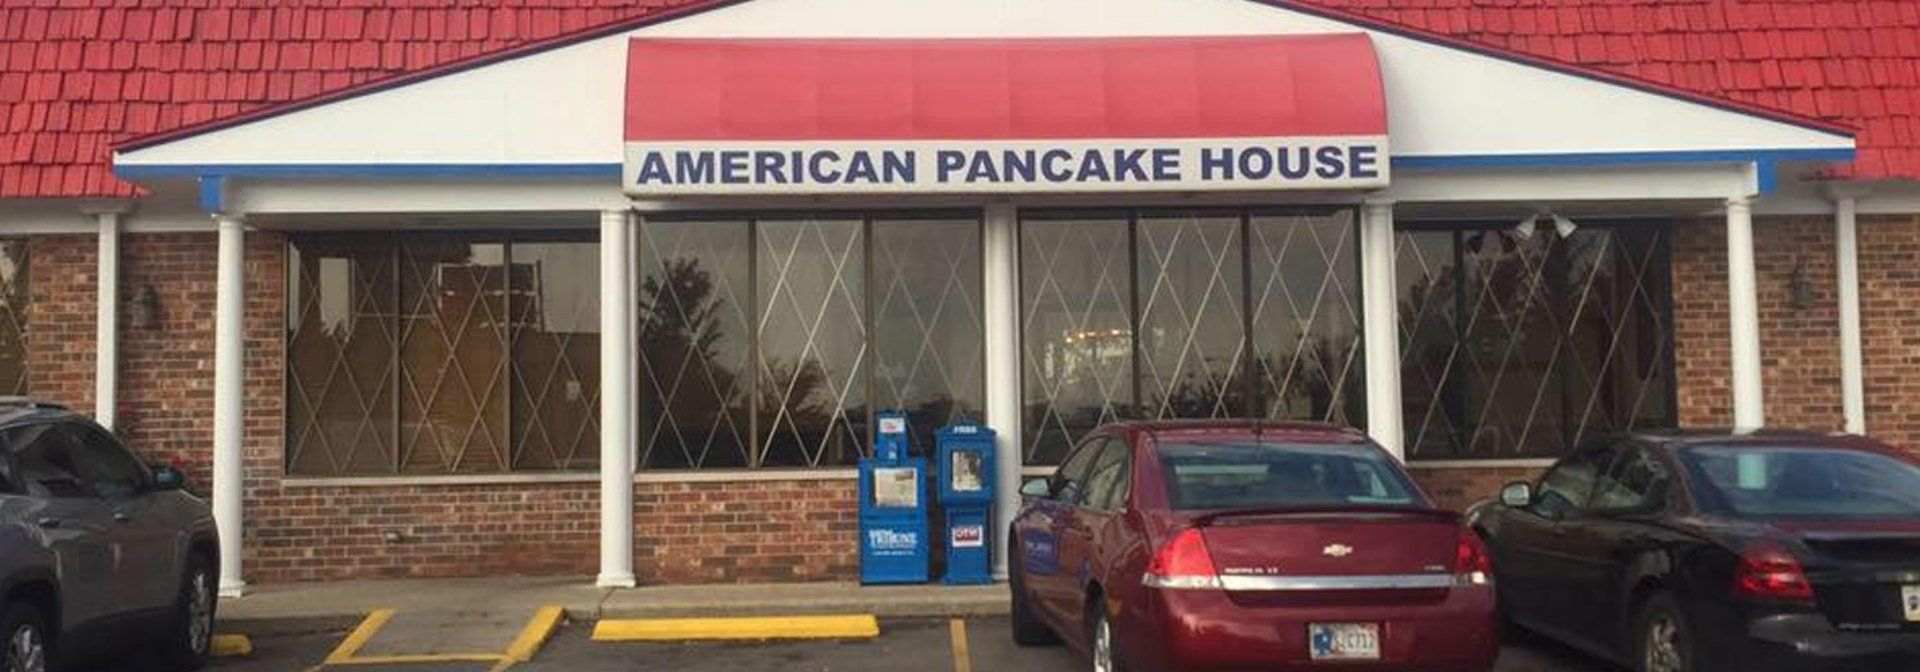 American Pancake House & Restaurant